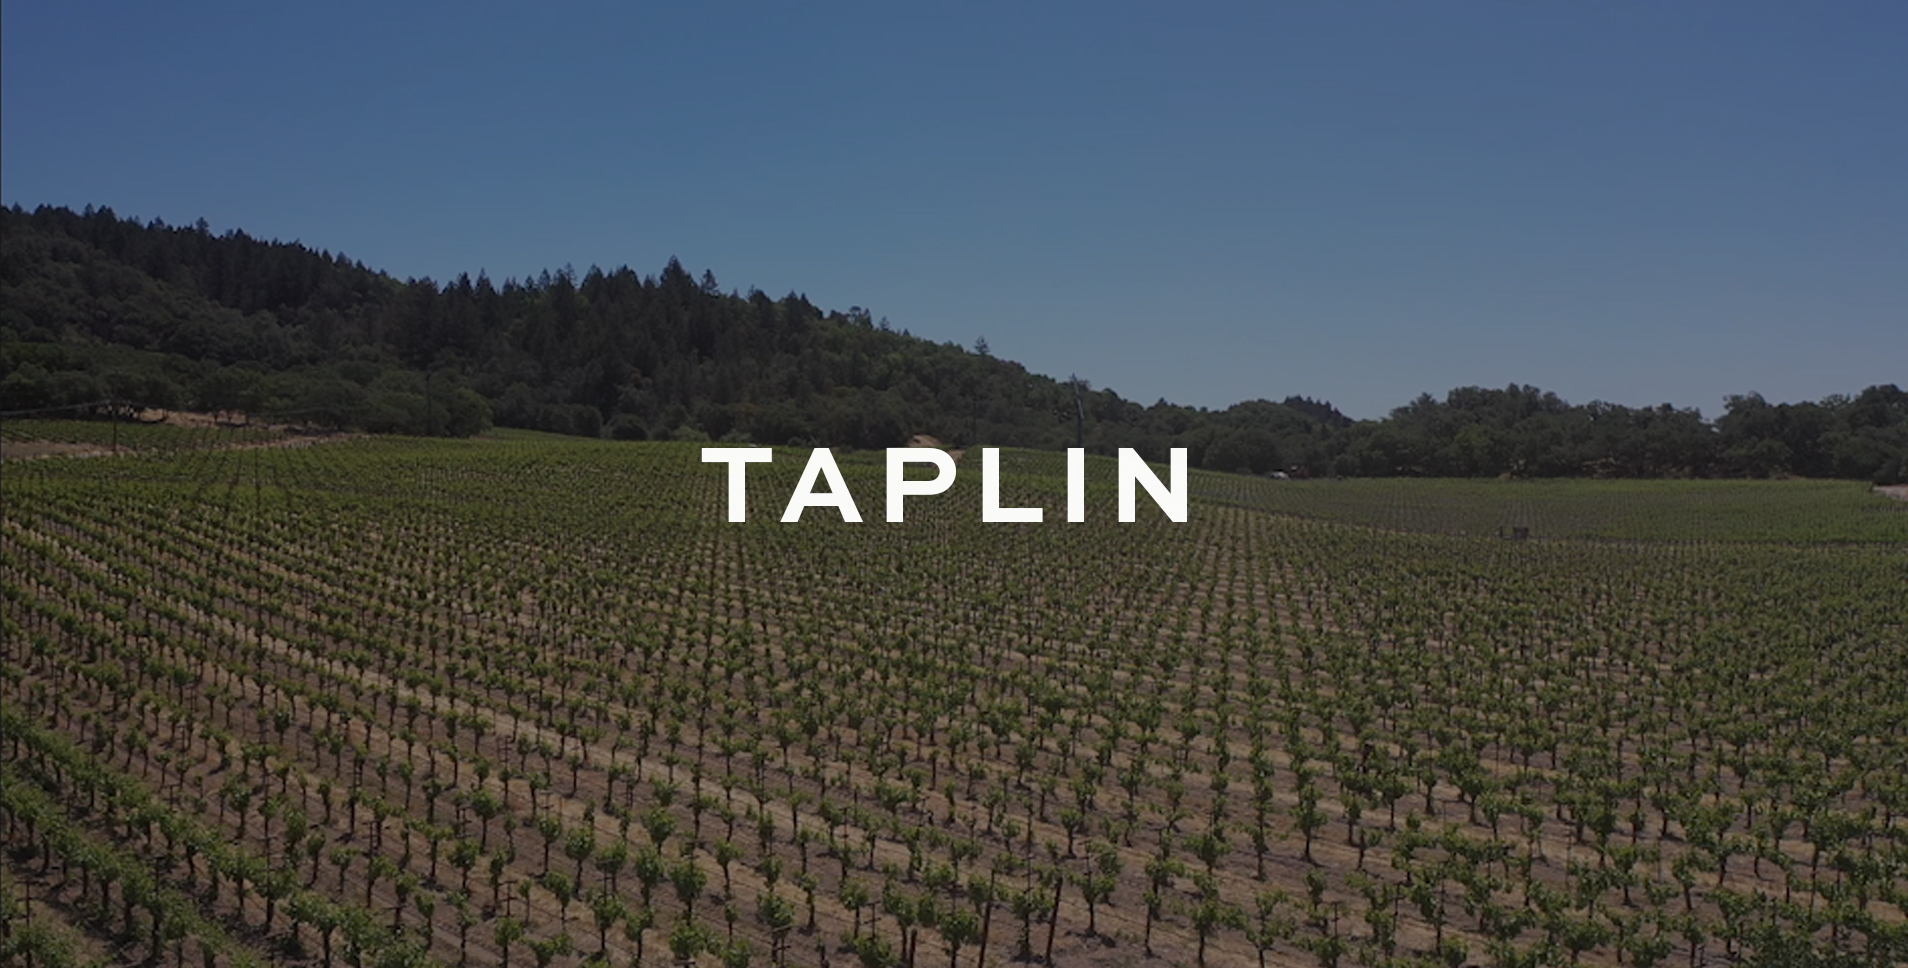 Heitz Cellar Taplin Vineyard with text "Taplin" overlayed